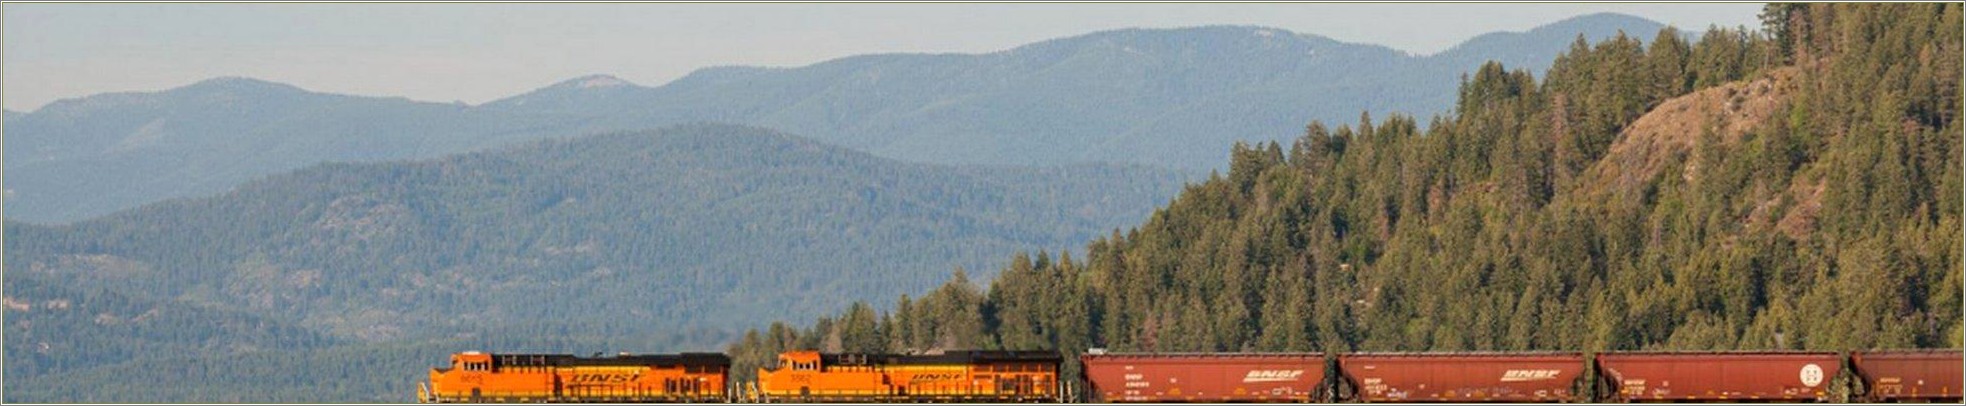 Bnsf Railroad Dispatcher Job Description For Resume